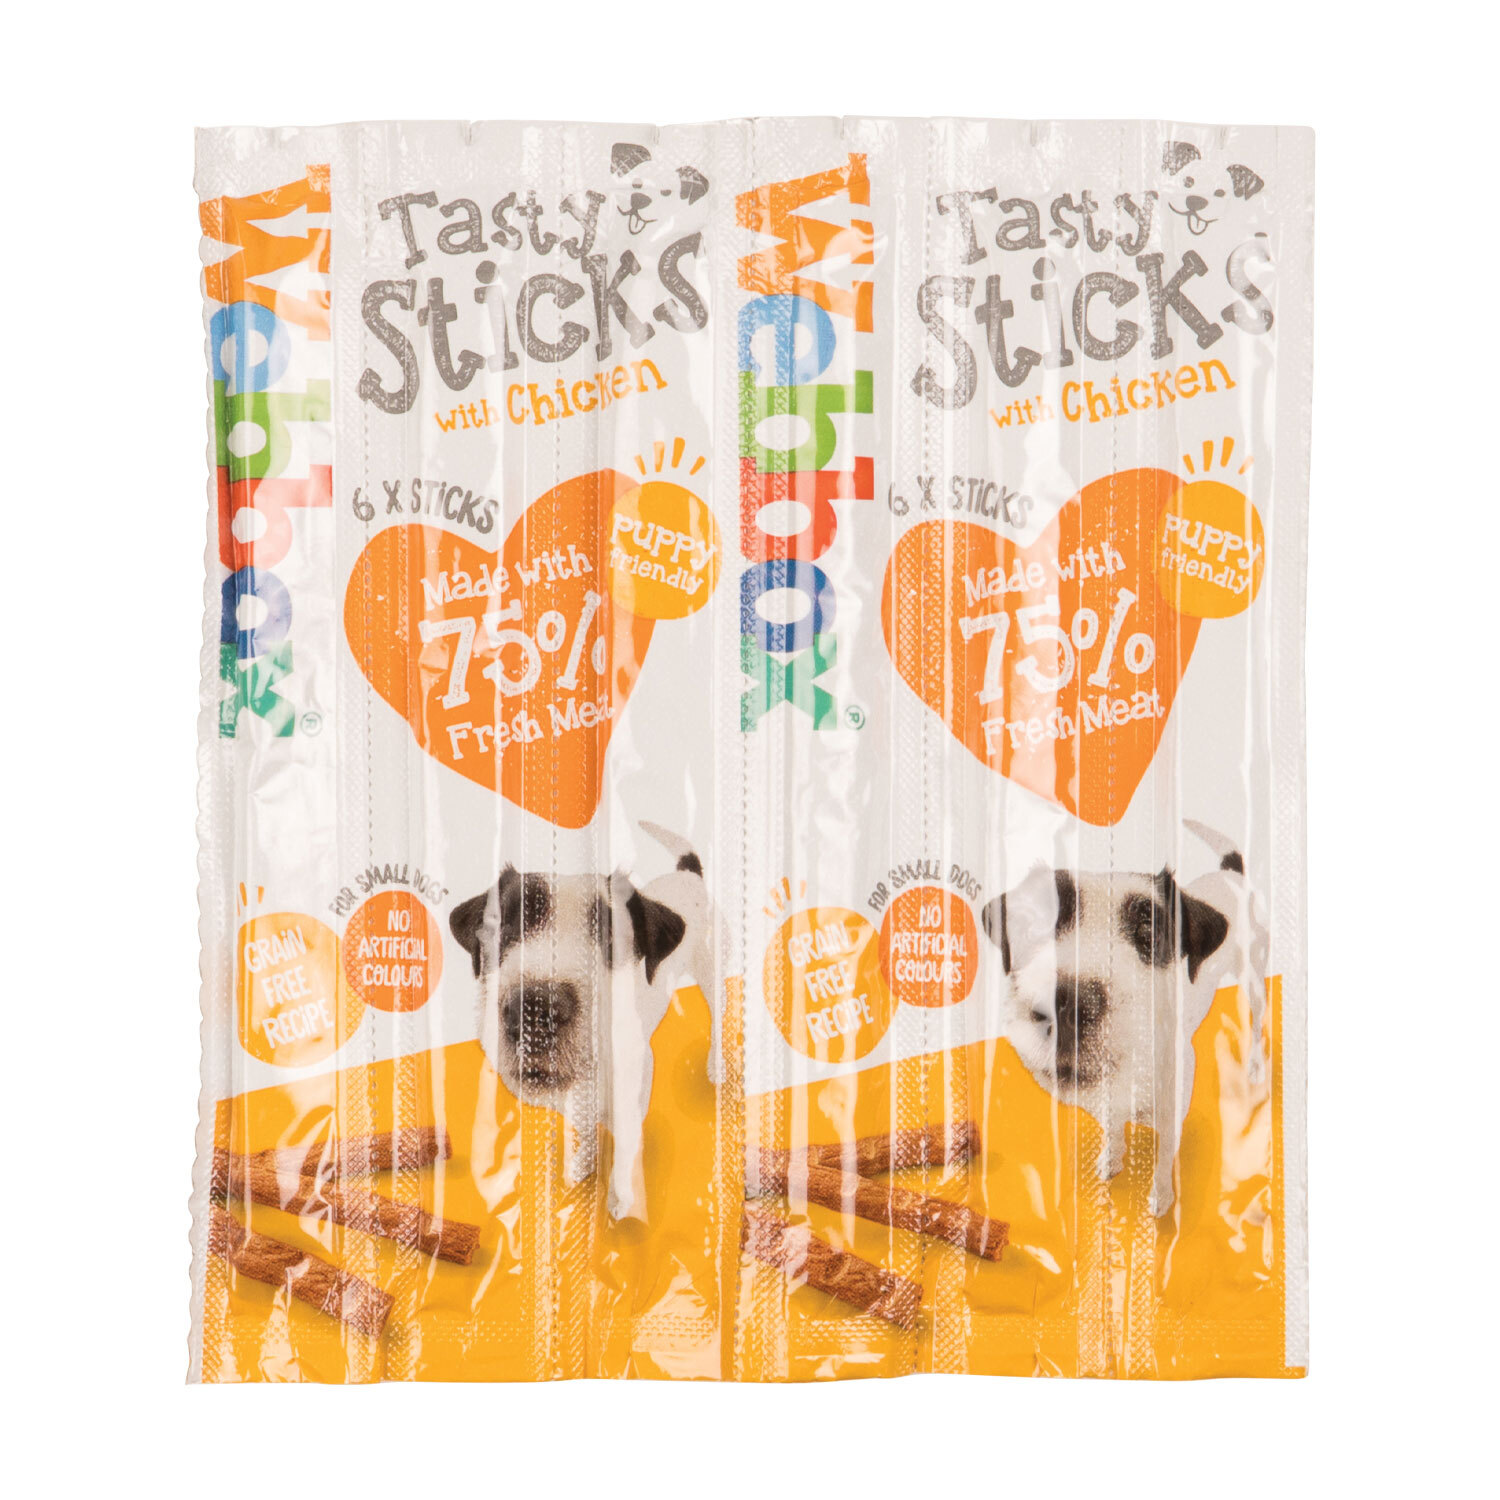 Webbox Tasty Chicken Sticks Dog Treat 6 Pack Image